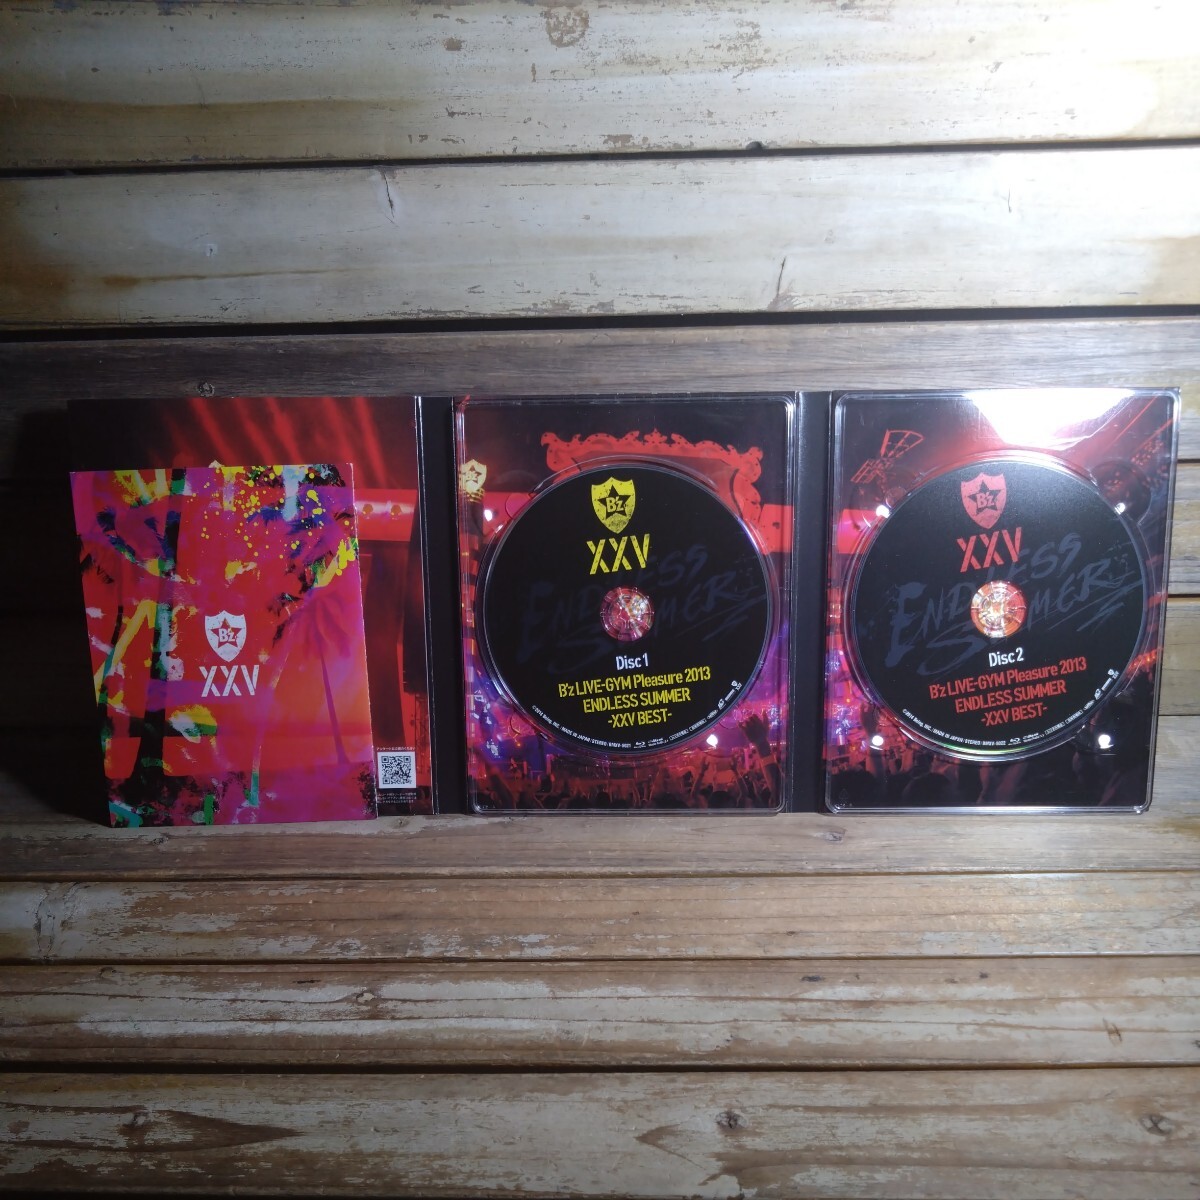 18 B'z LIVE-2013 ENDLESS SUMMER XXV BEST 邦楽 DVD Blue-ray_画像3